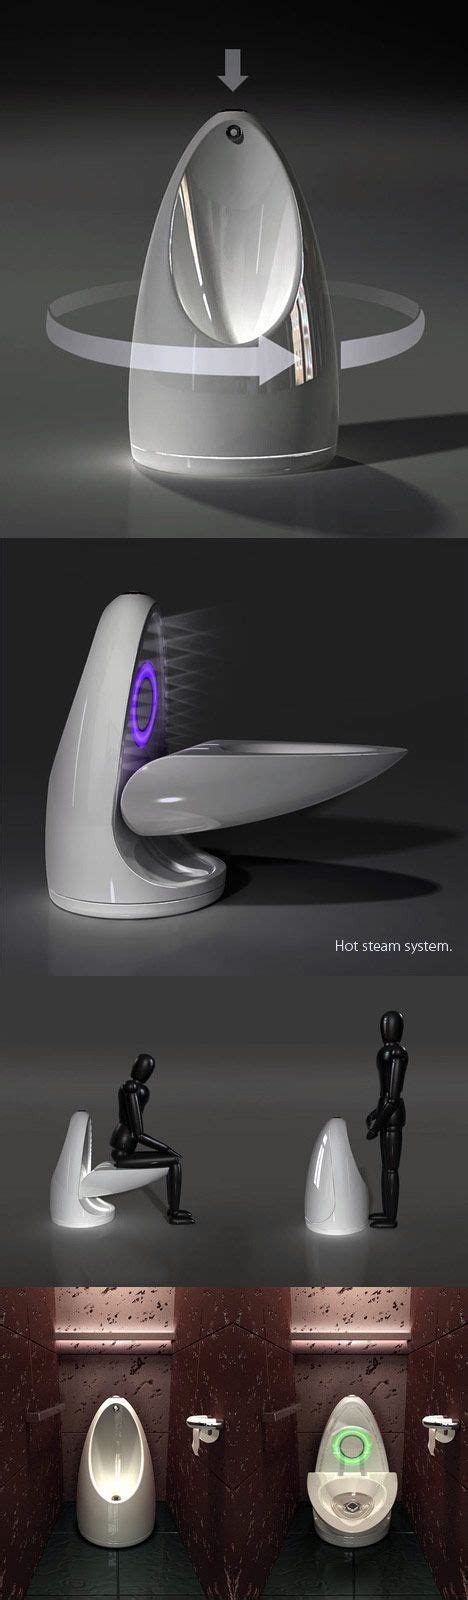 Bathrooms Of The Future Toilet Design Modern Bathroom Design